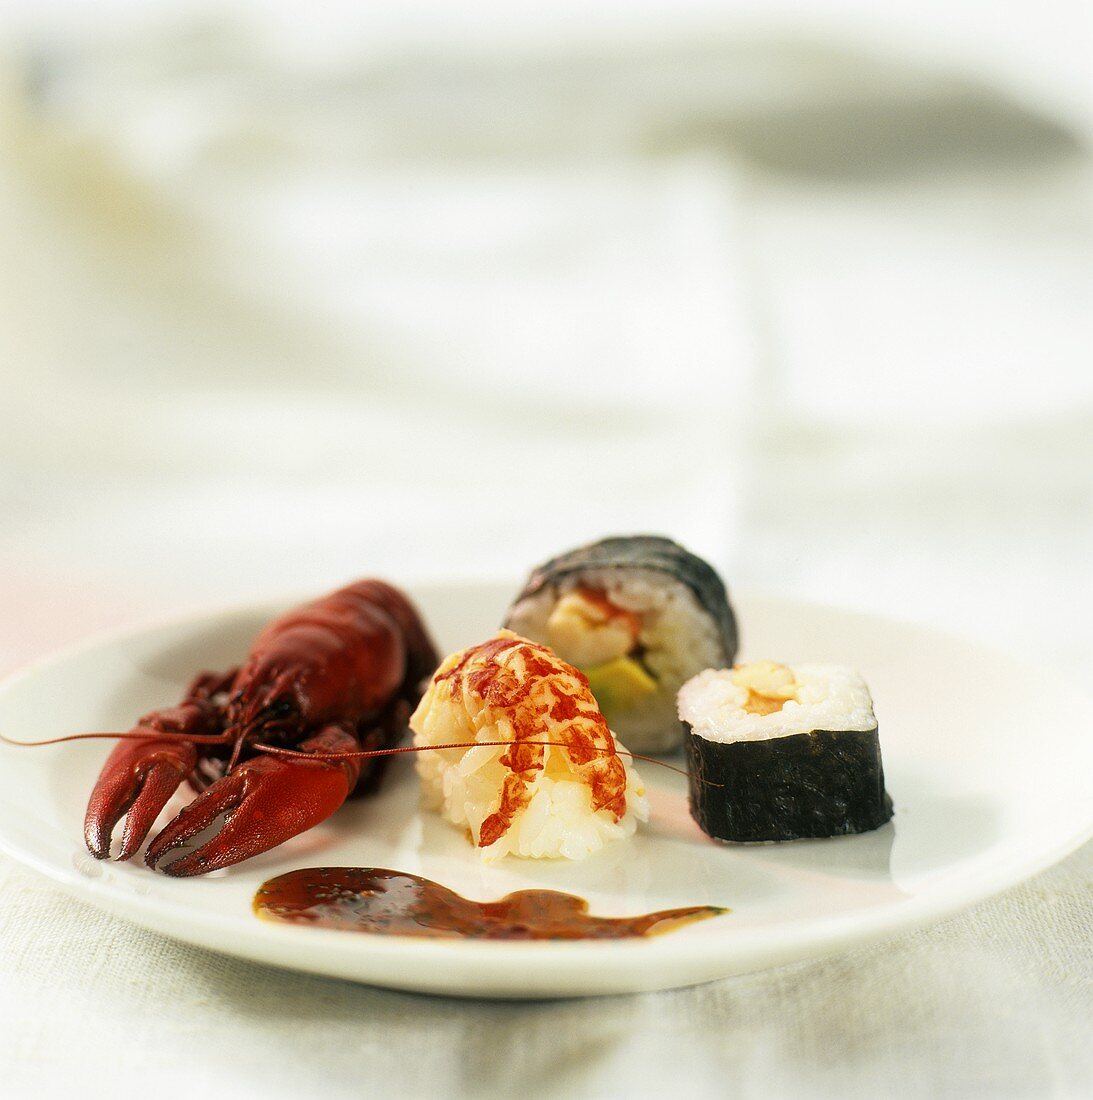 Nigiri sushi, maki sushi and cooked freshwater crayfish